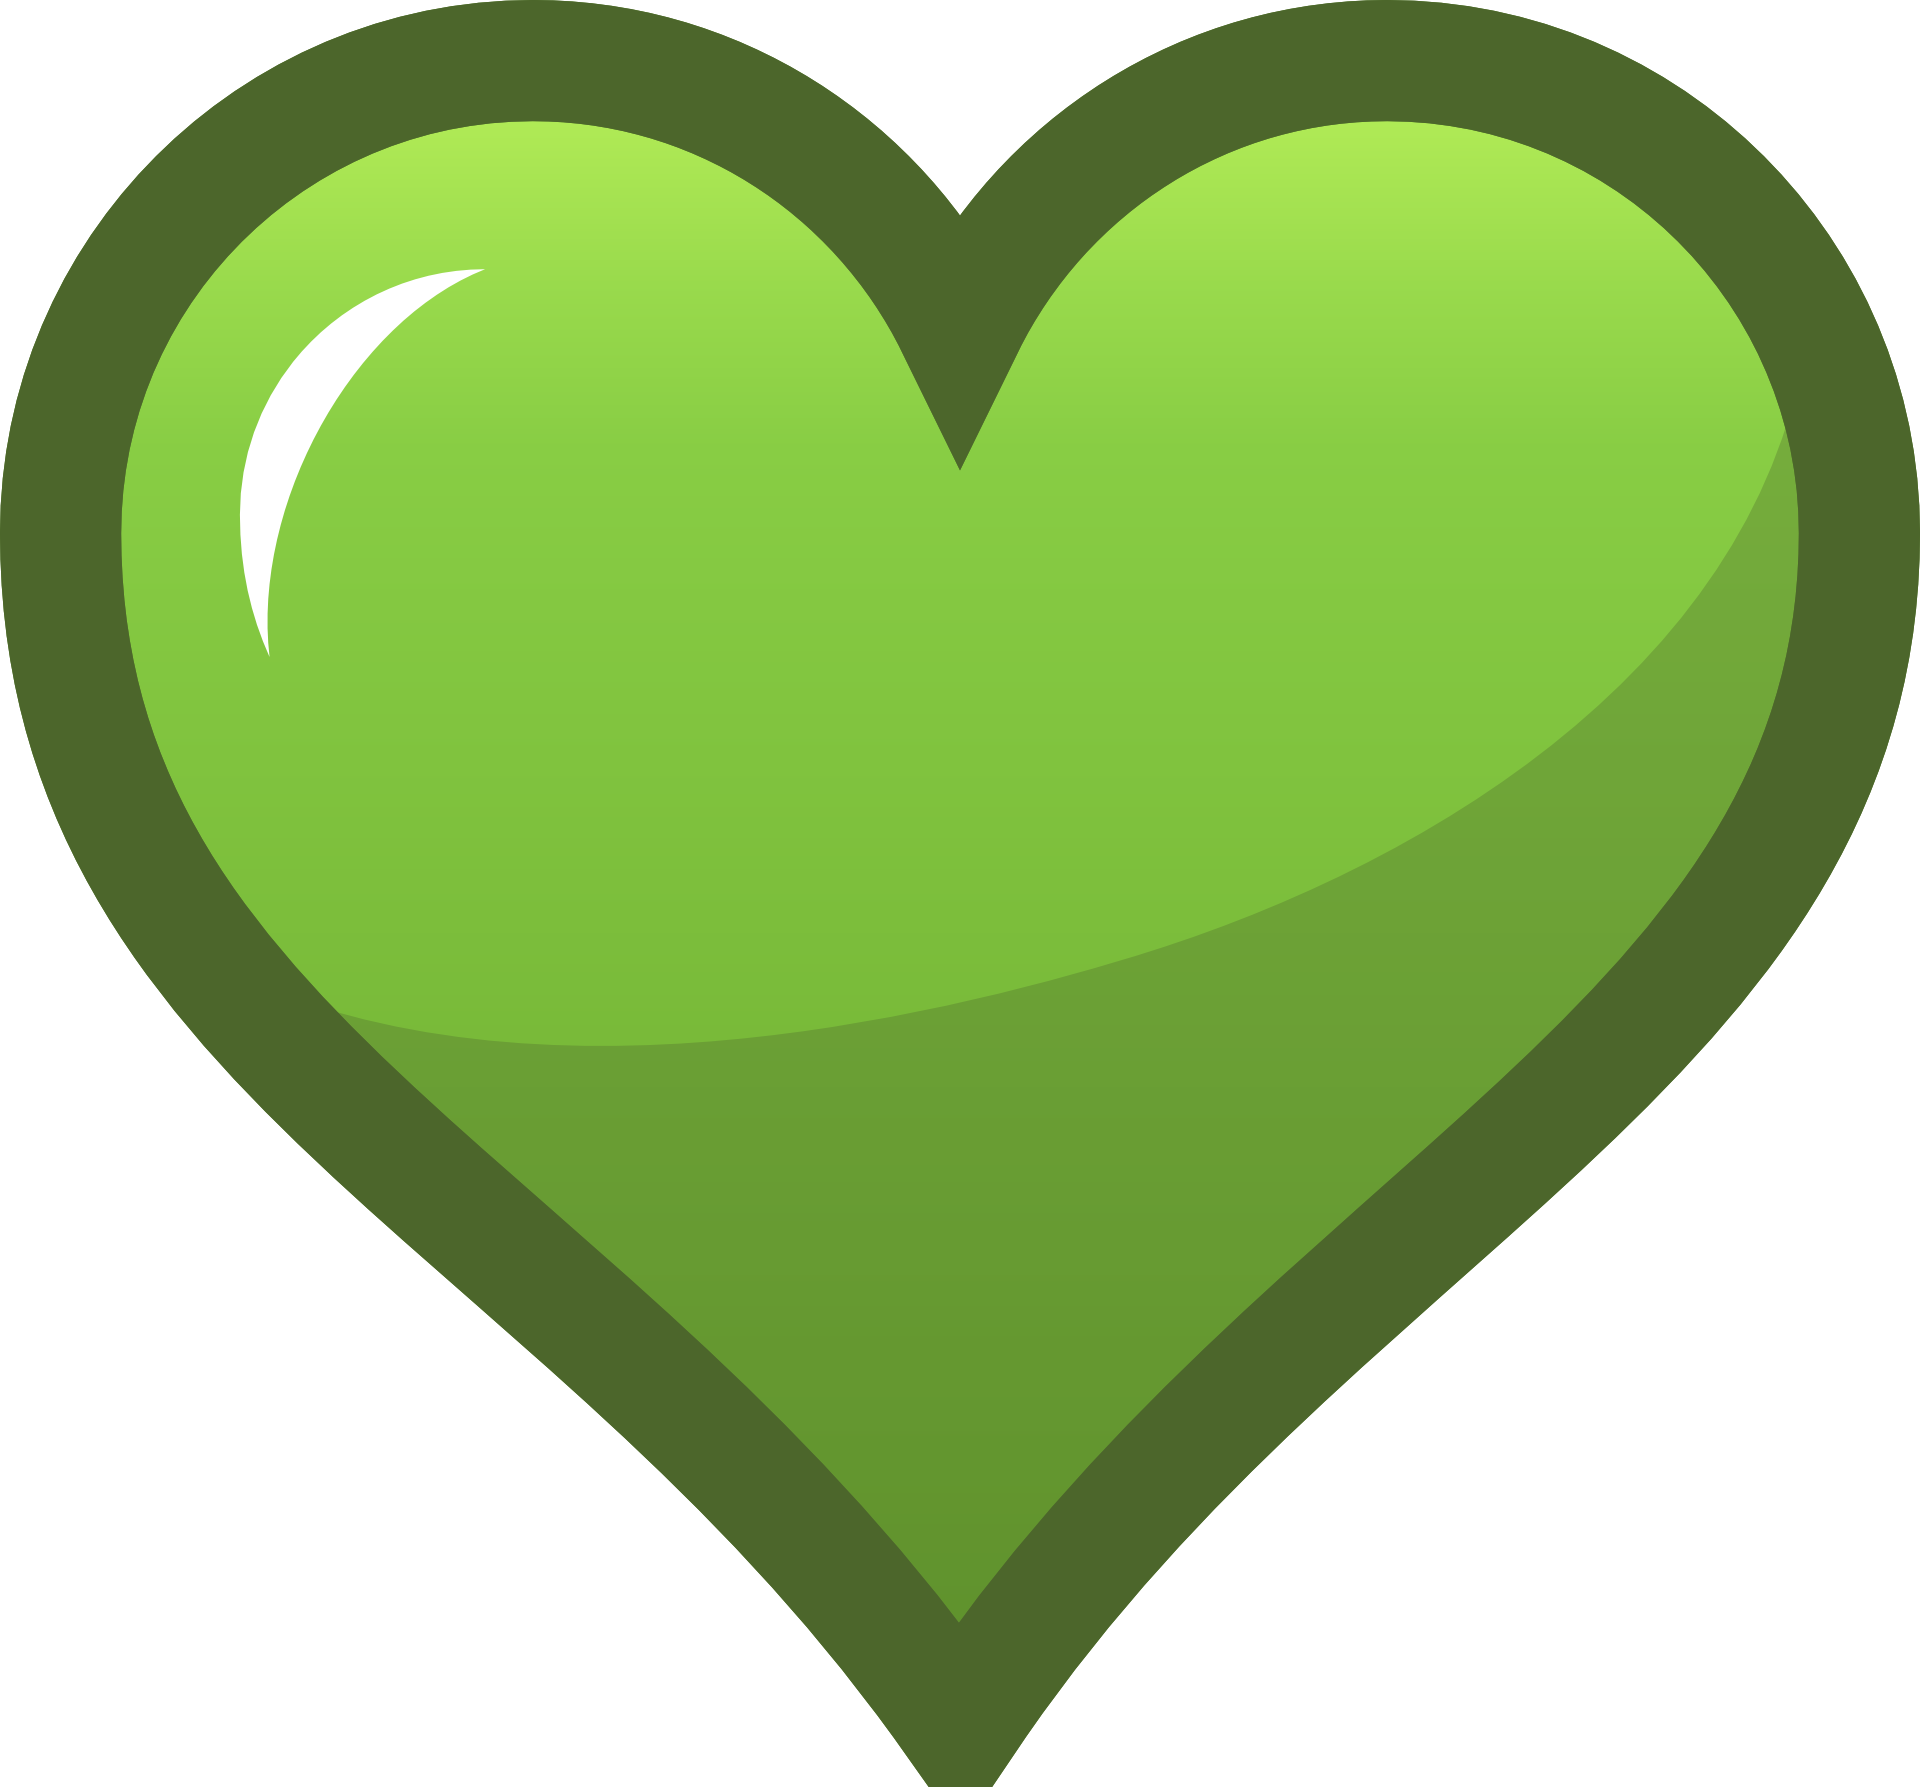 Big green heart.